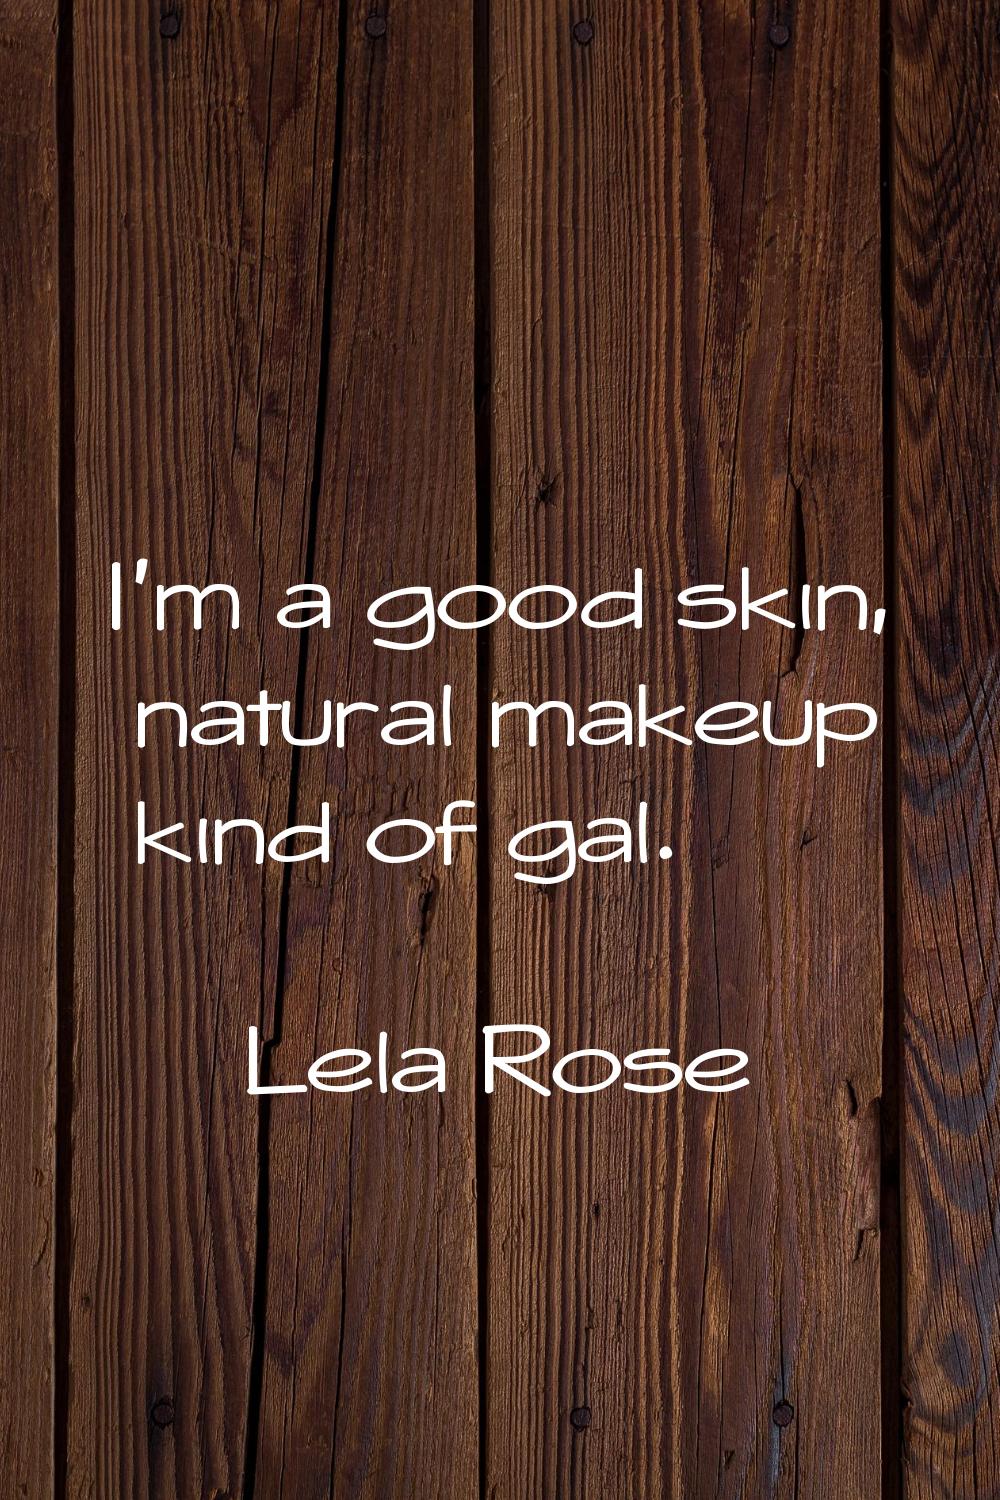 I'm a good skin, natural makeup kind of gal.